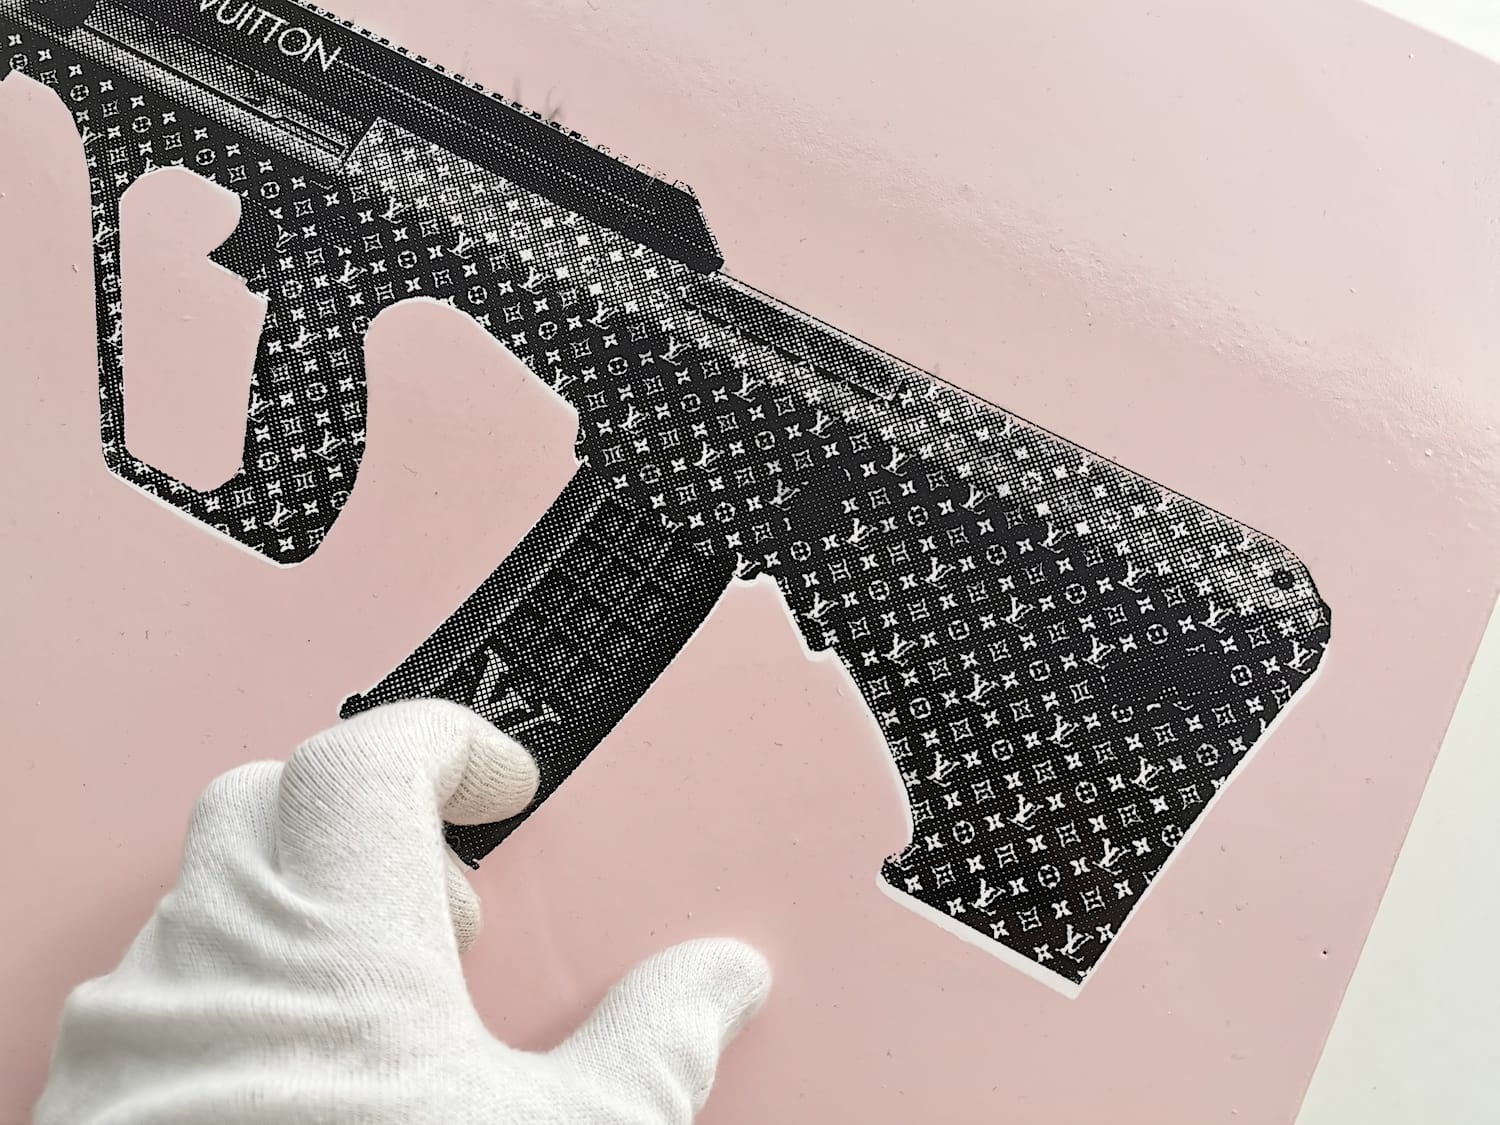 Louis Vuitton Gun wallpaper by TDM_PRODUCTION - Download on ZEDGE™